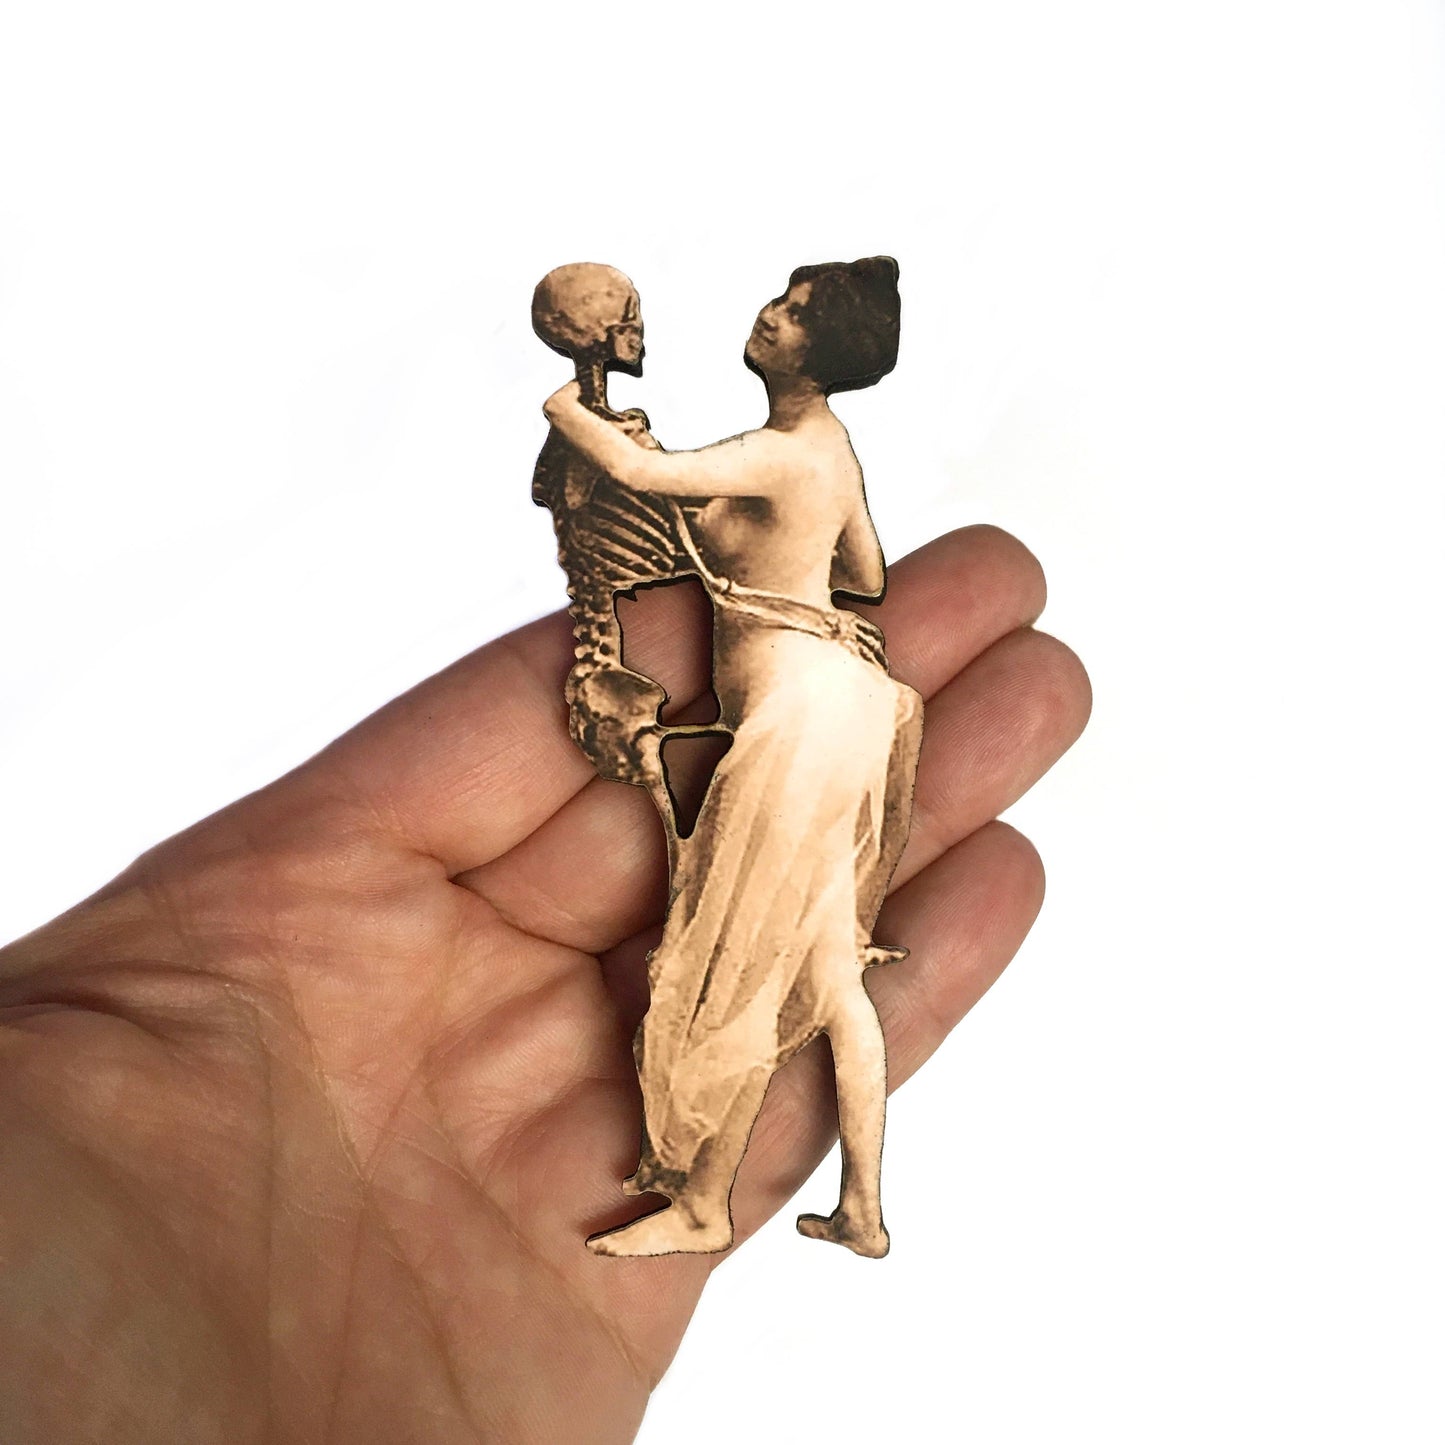 Vintage Erotica Magnet - Dancing with Skeleton - Wood